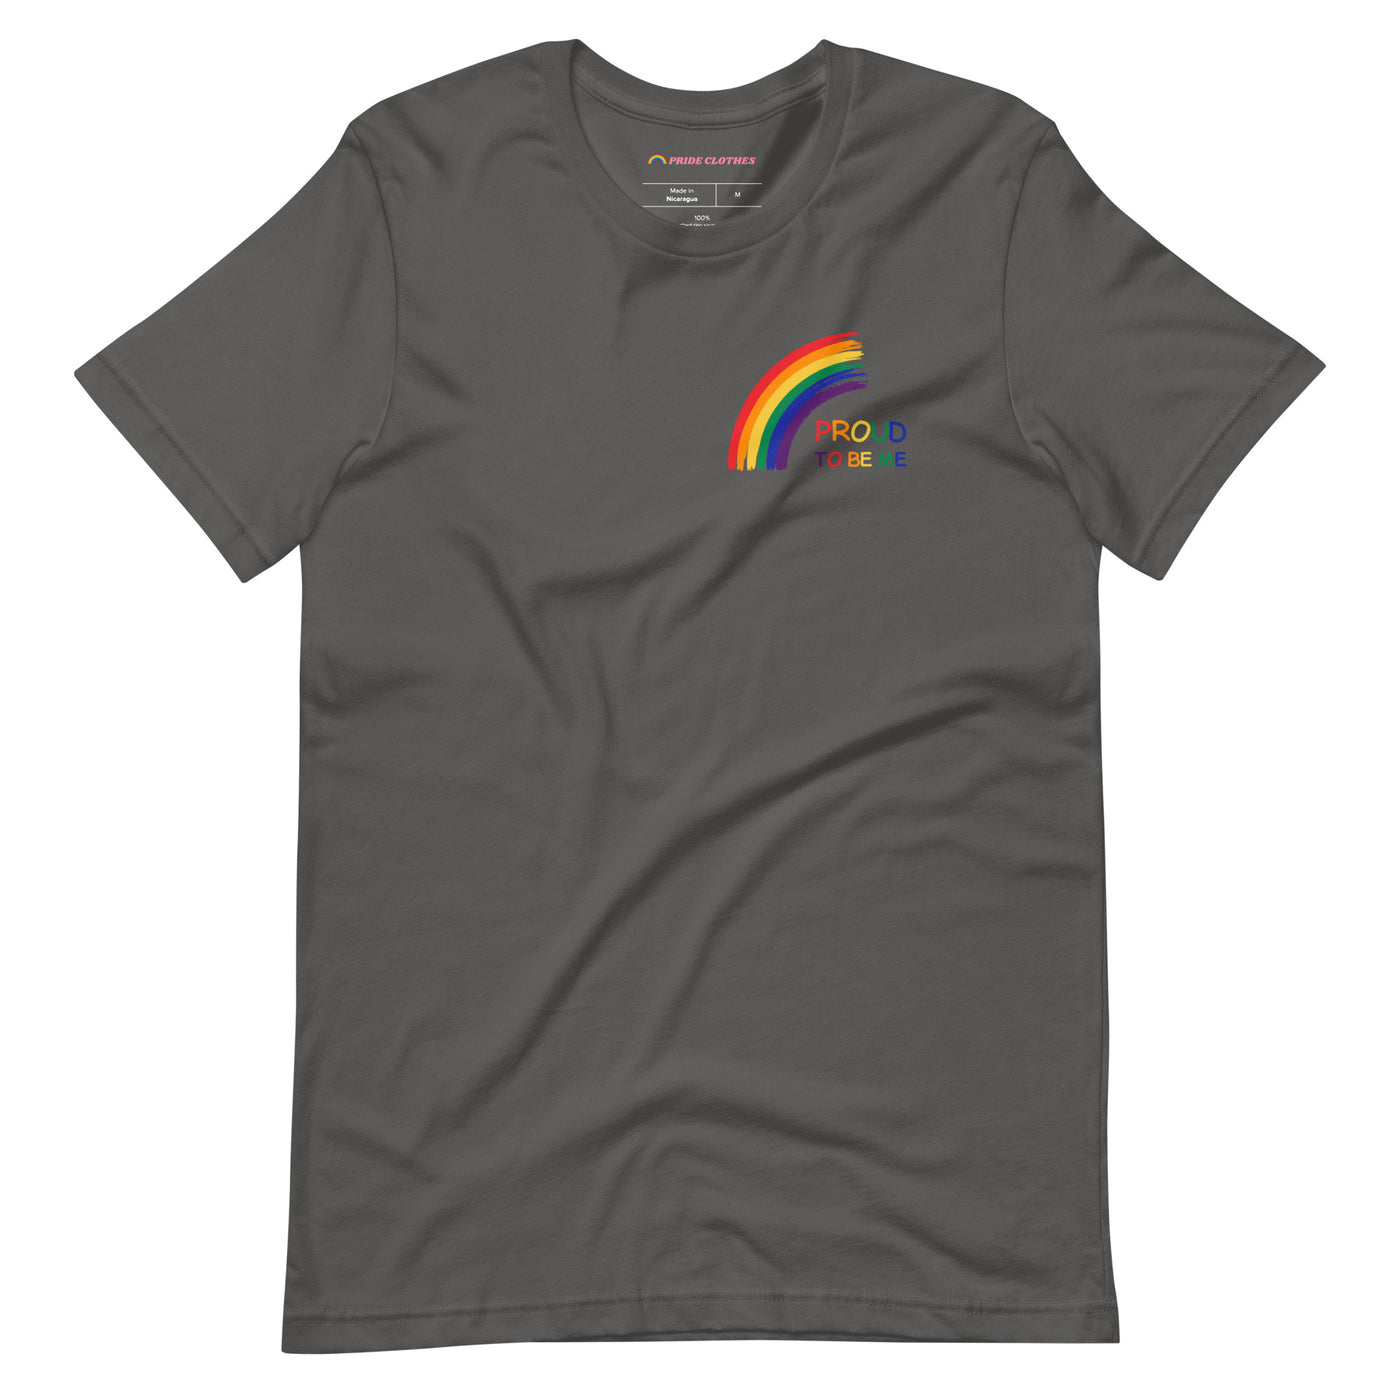 Pride Clothes - Far Beyond Basic Proud to Be Me Rainbow Pride T-Shirt - Asphalt